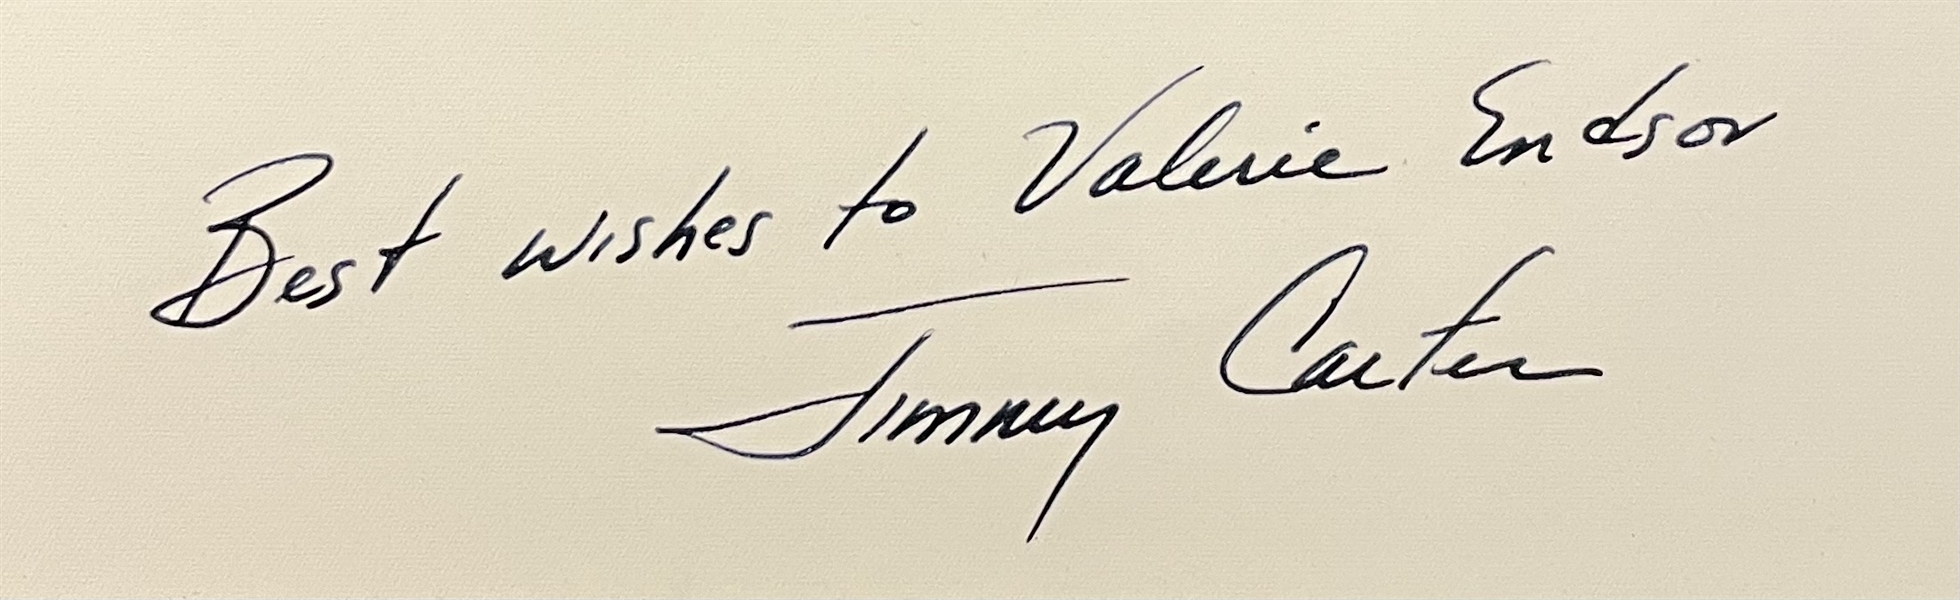 Jimmy Carter Signed Photo 